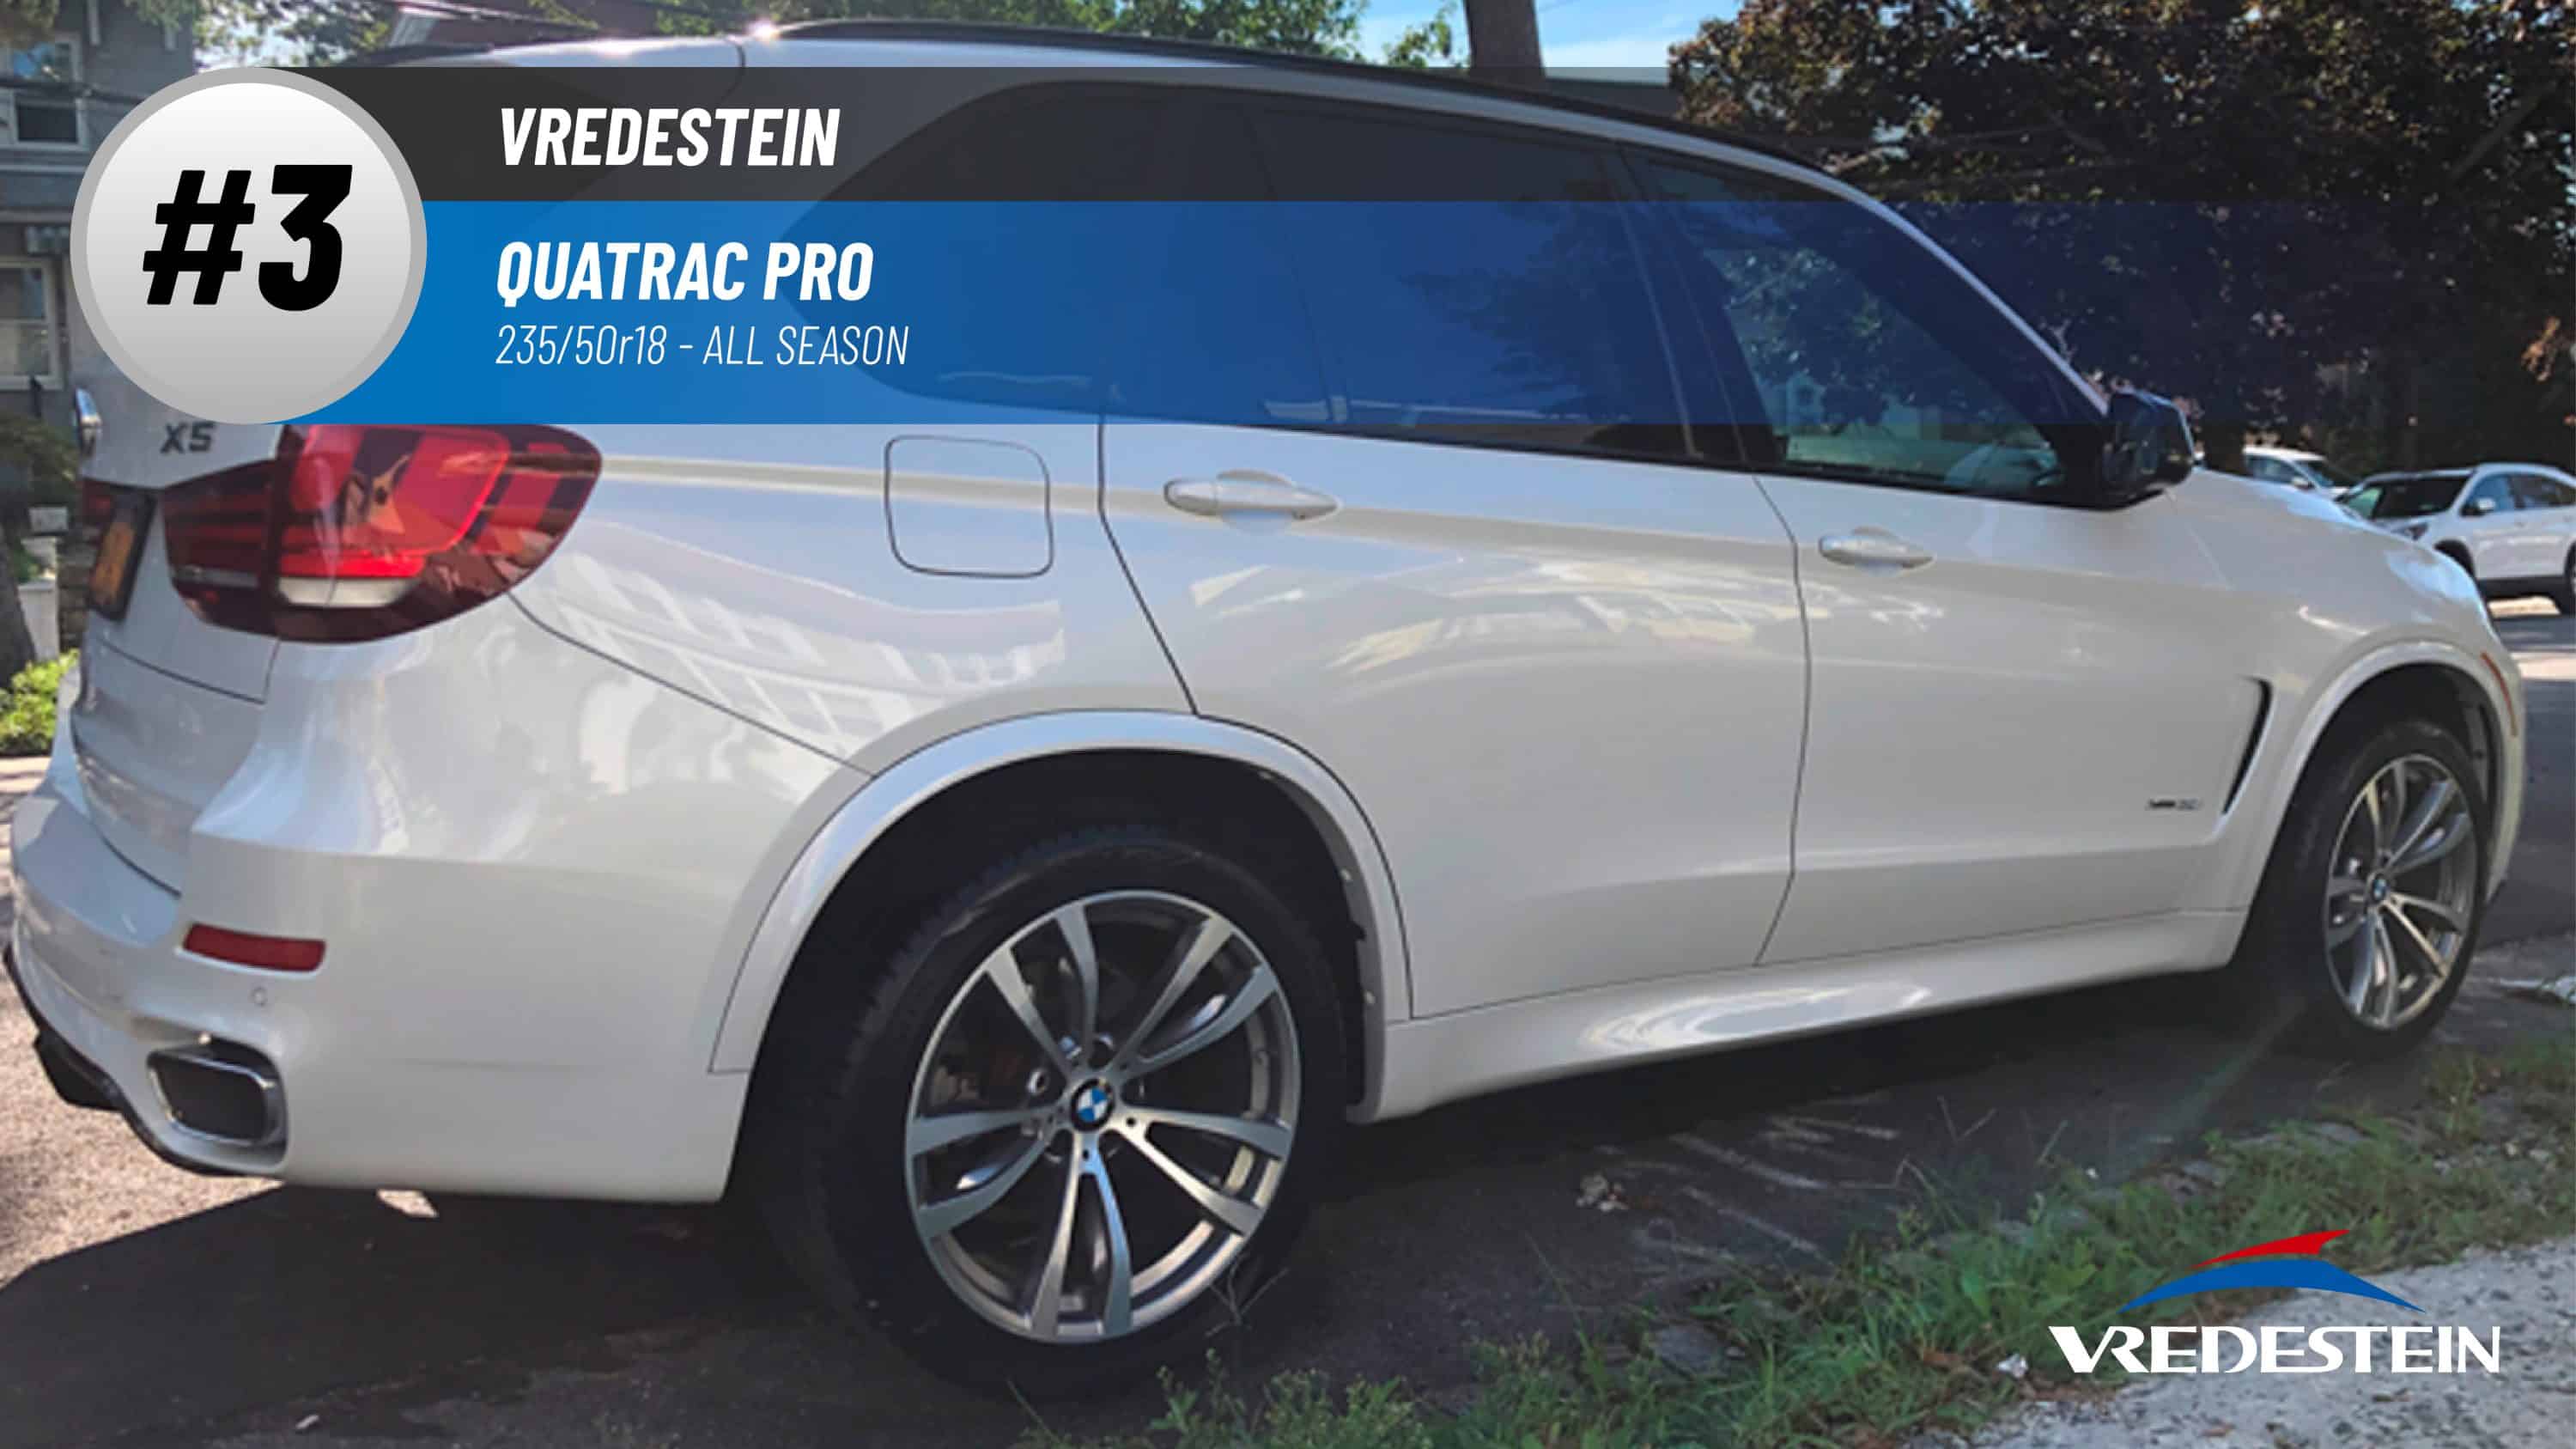 Top #3 All Season Tires: Vredestein Quatrac Pro –best 235/50r18